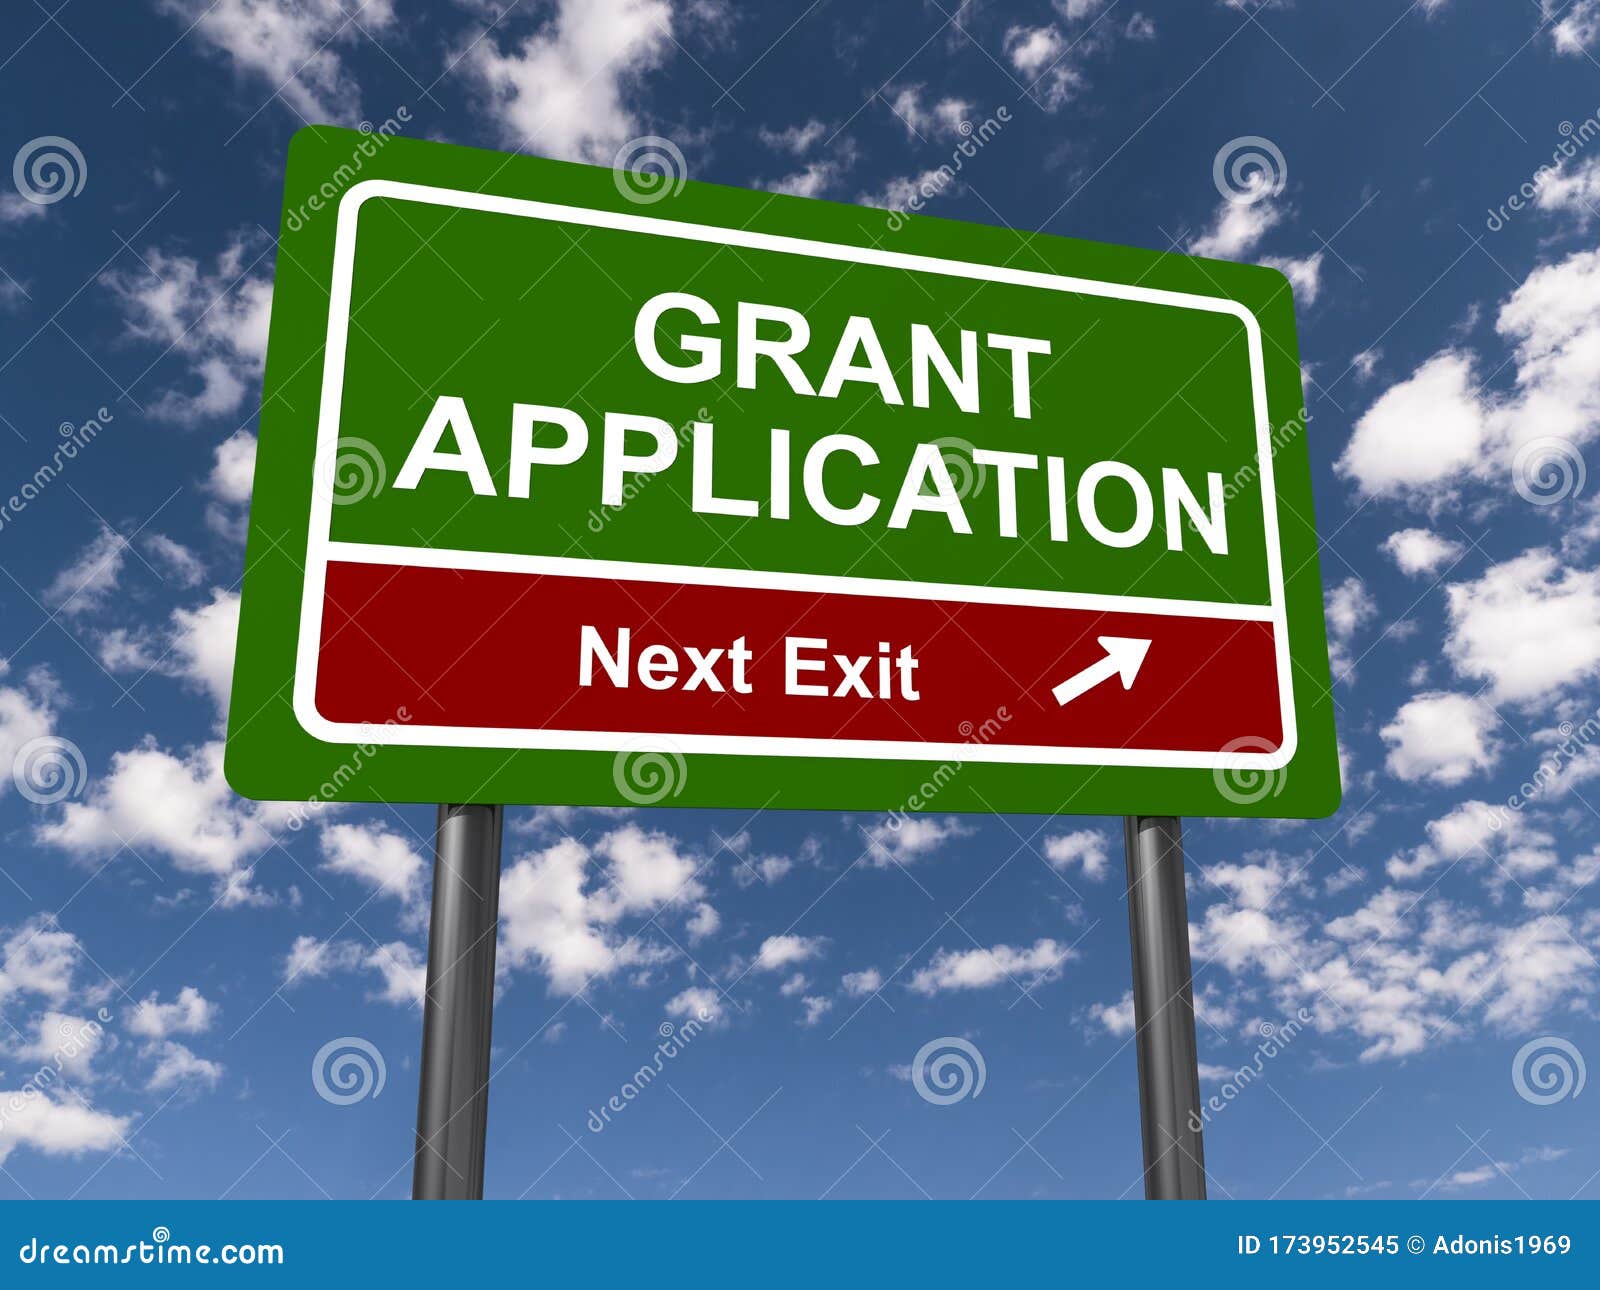 grant application traffic sign